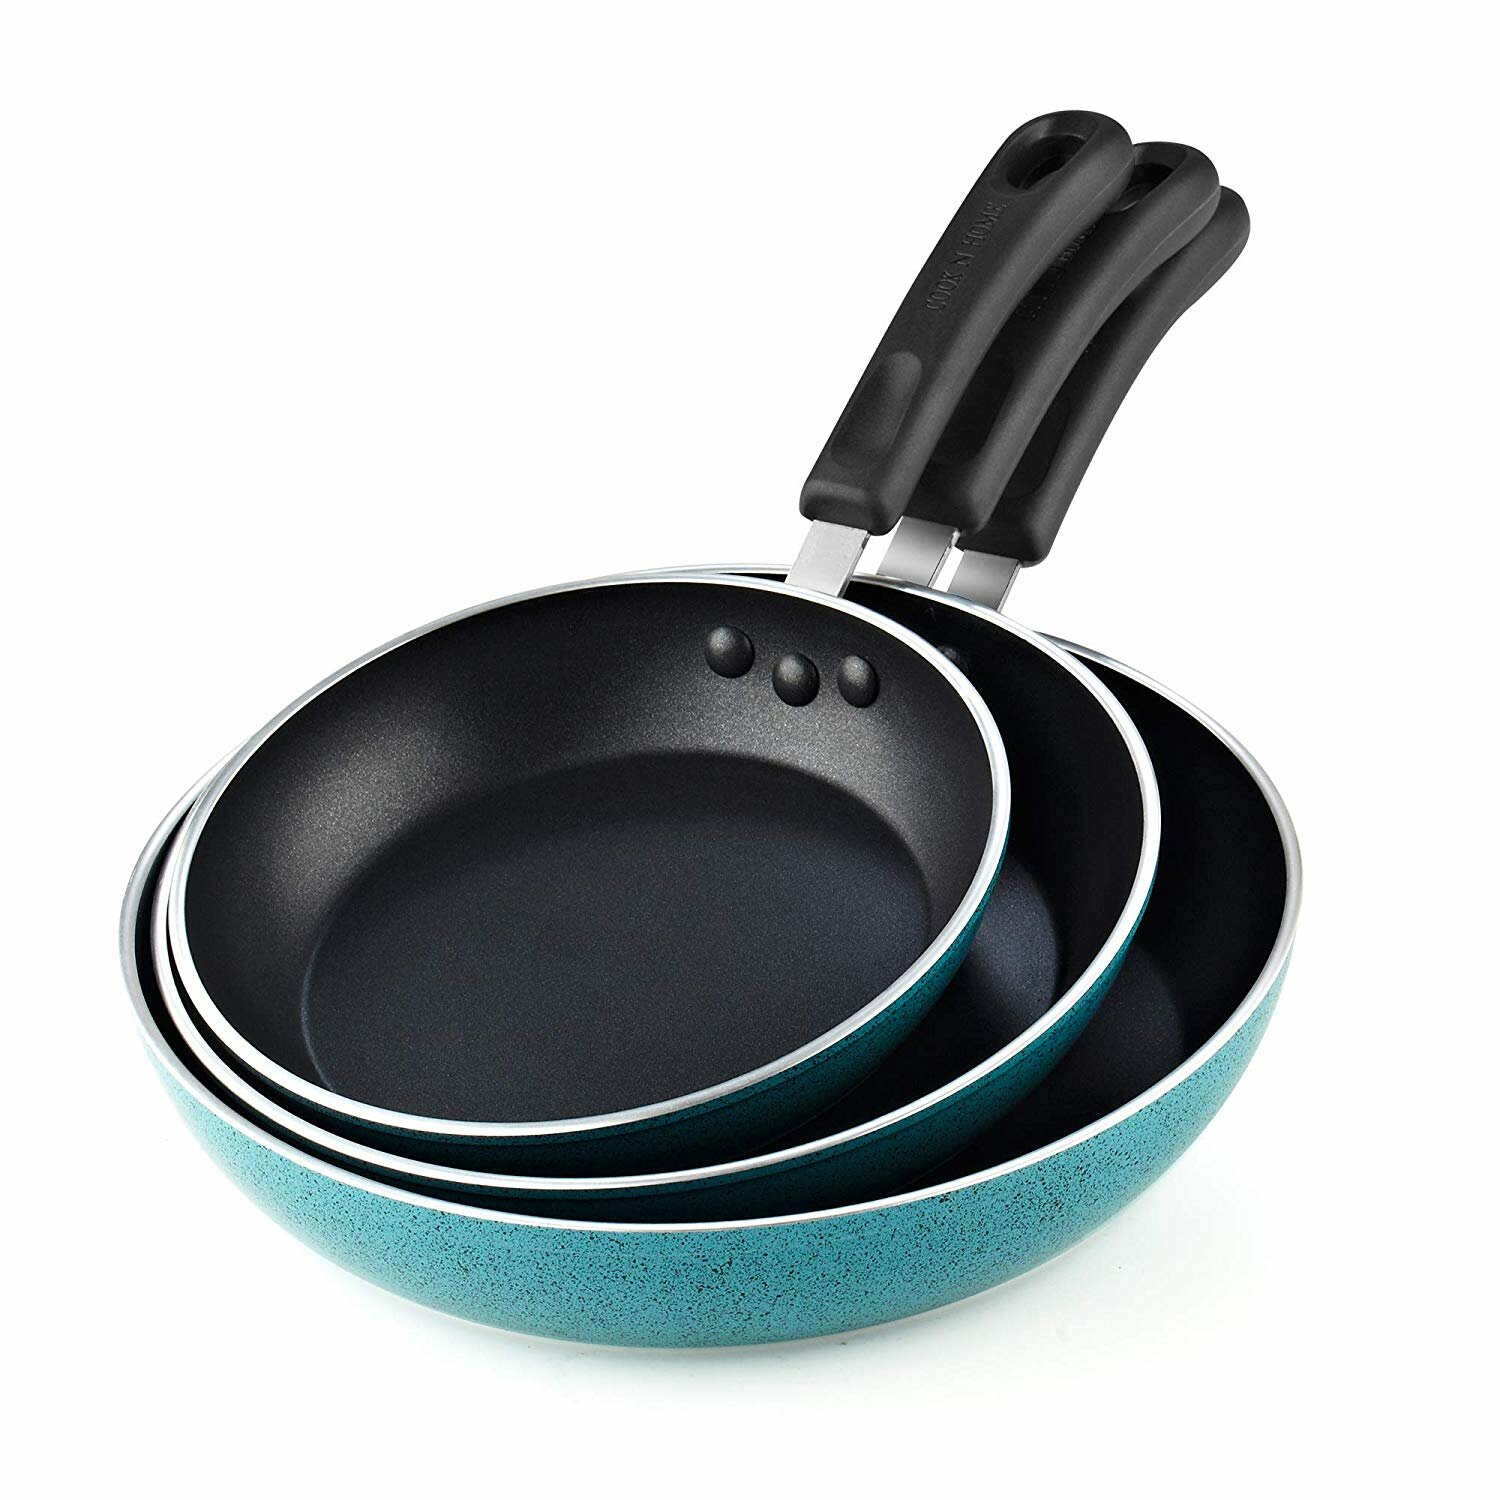 Cook N Home Basics Nonstick Saute Skillet Fry Pan 3-Piece Set, 8 inch/